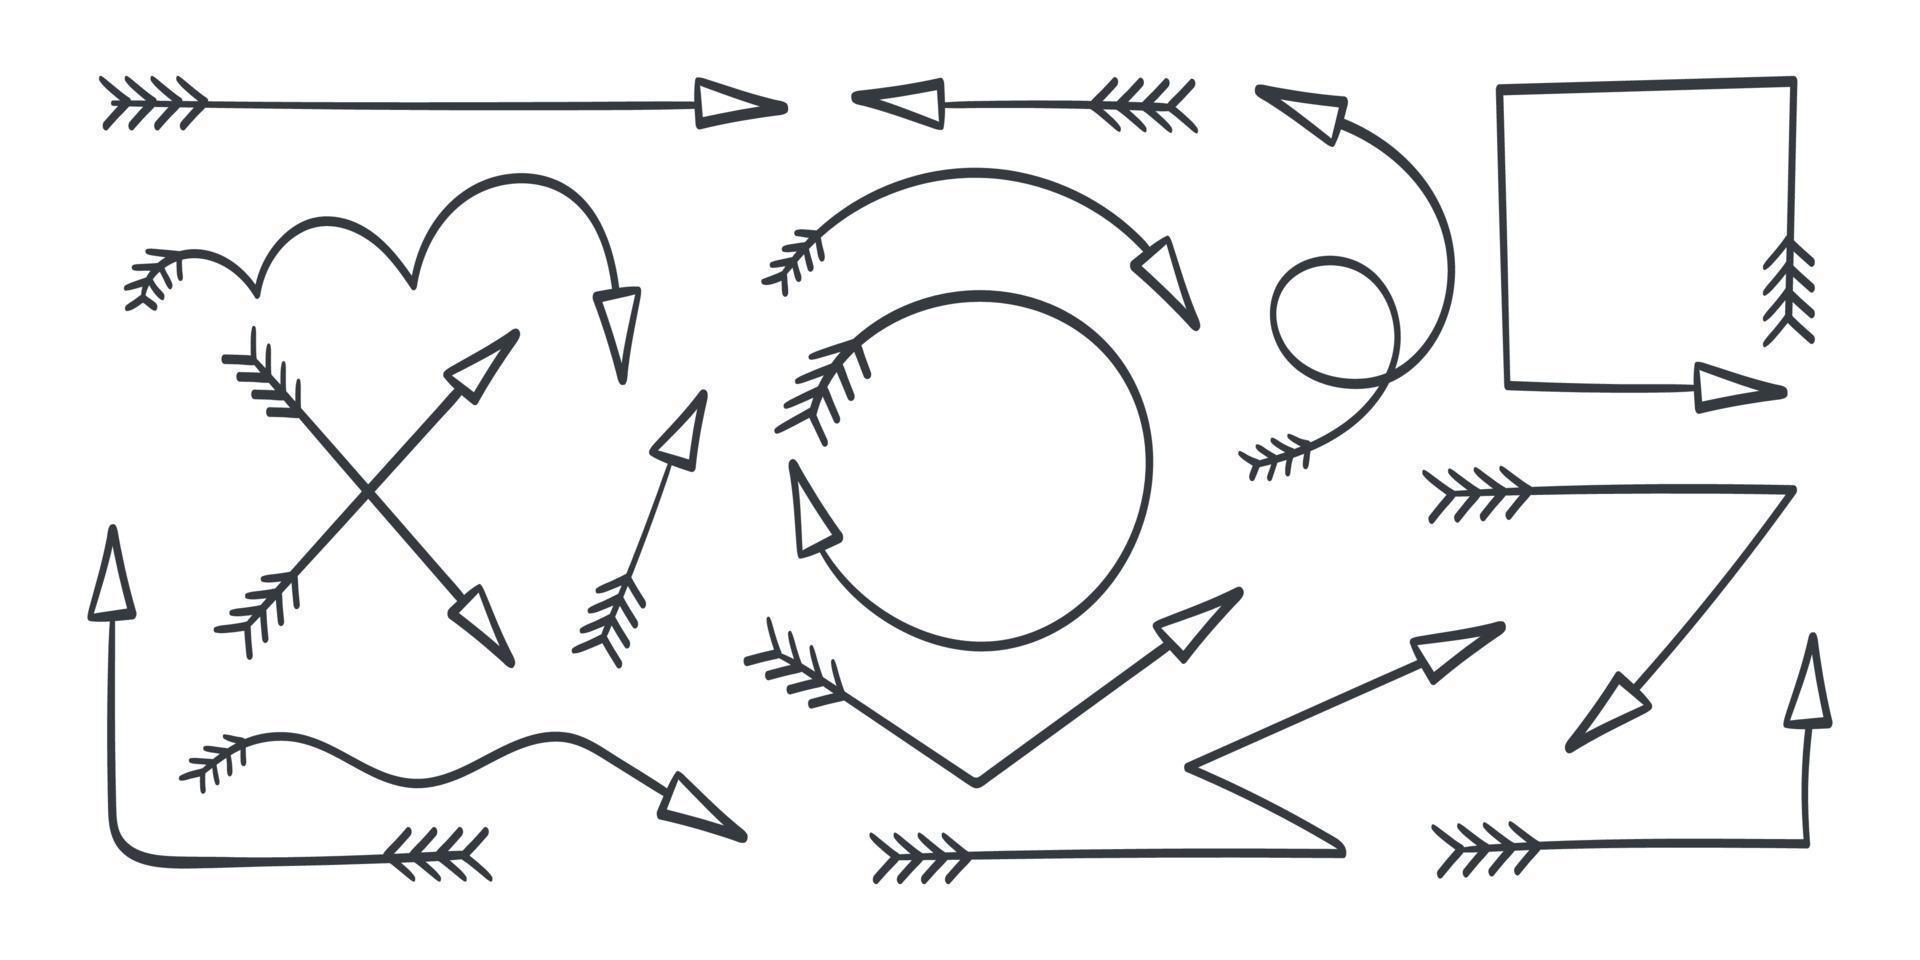 A set of hand-drawn arrows. Vector arrows. Set of different arrows. Vector illustration